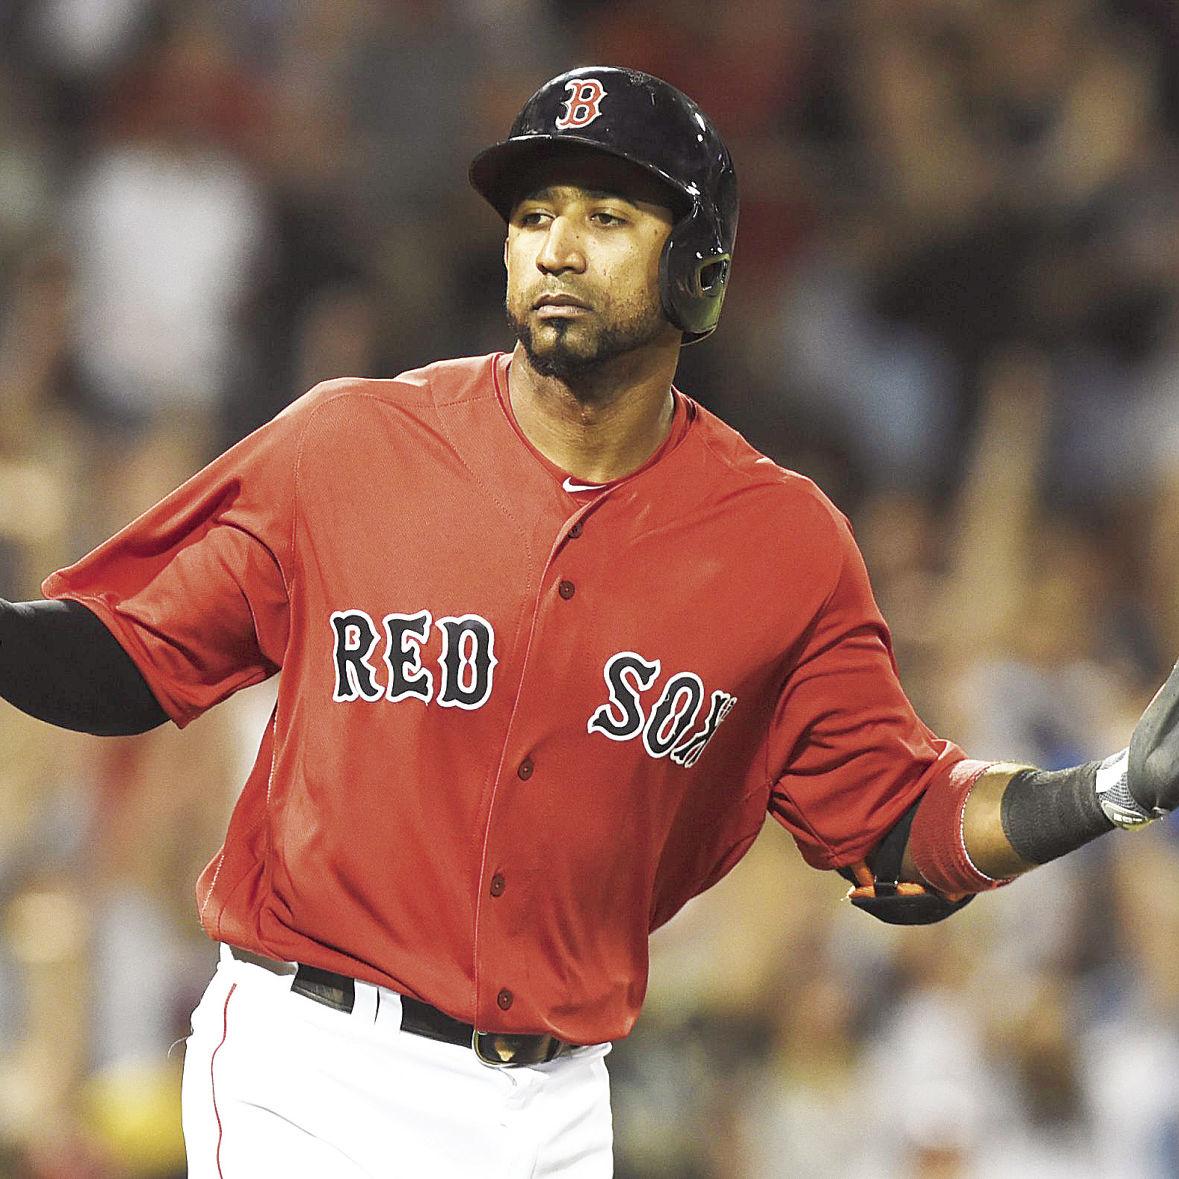 Boston Red Sox's Christian Vazquez has higher WAR than Bryce